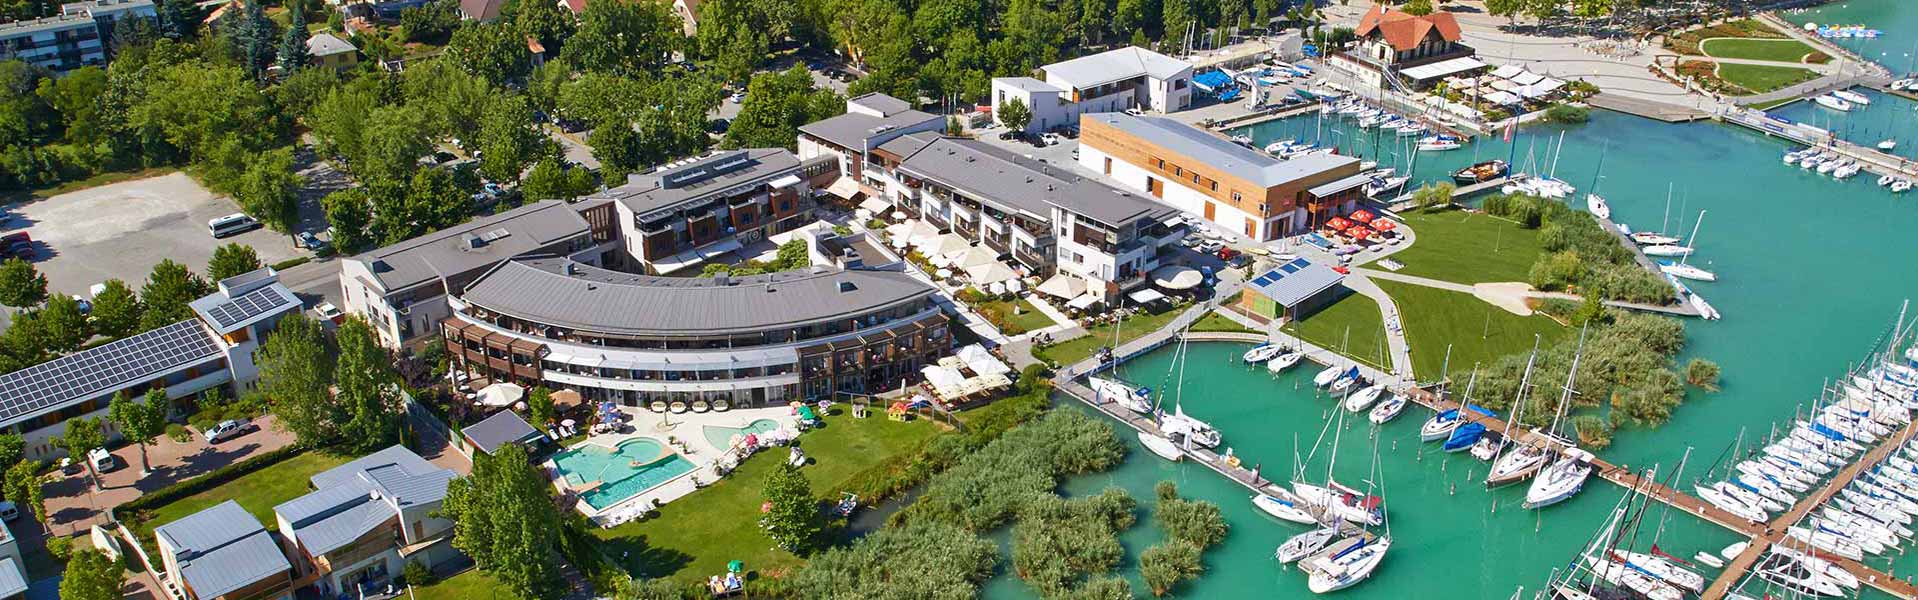 Hasznos információk :: Hotel Golden Lake Resort